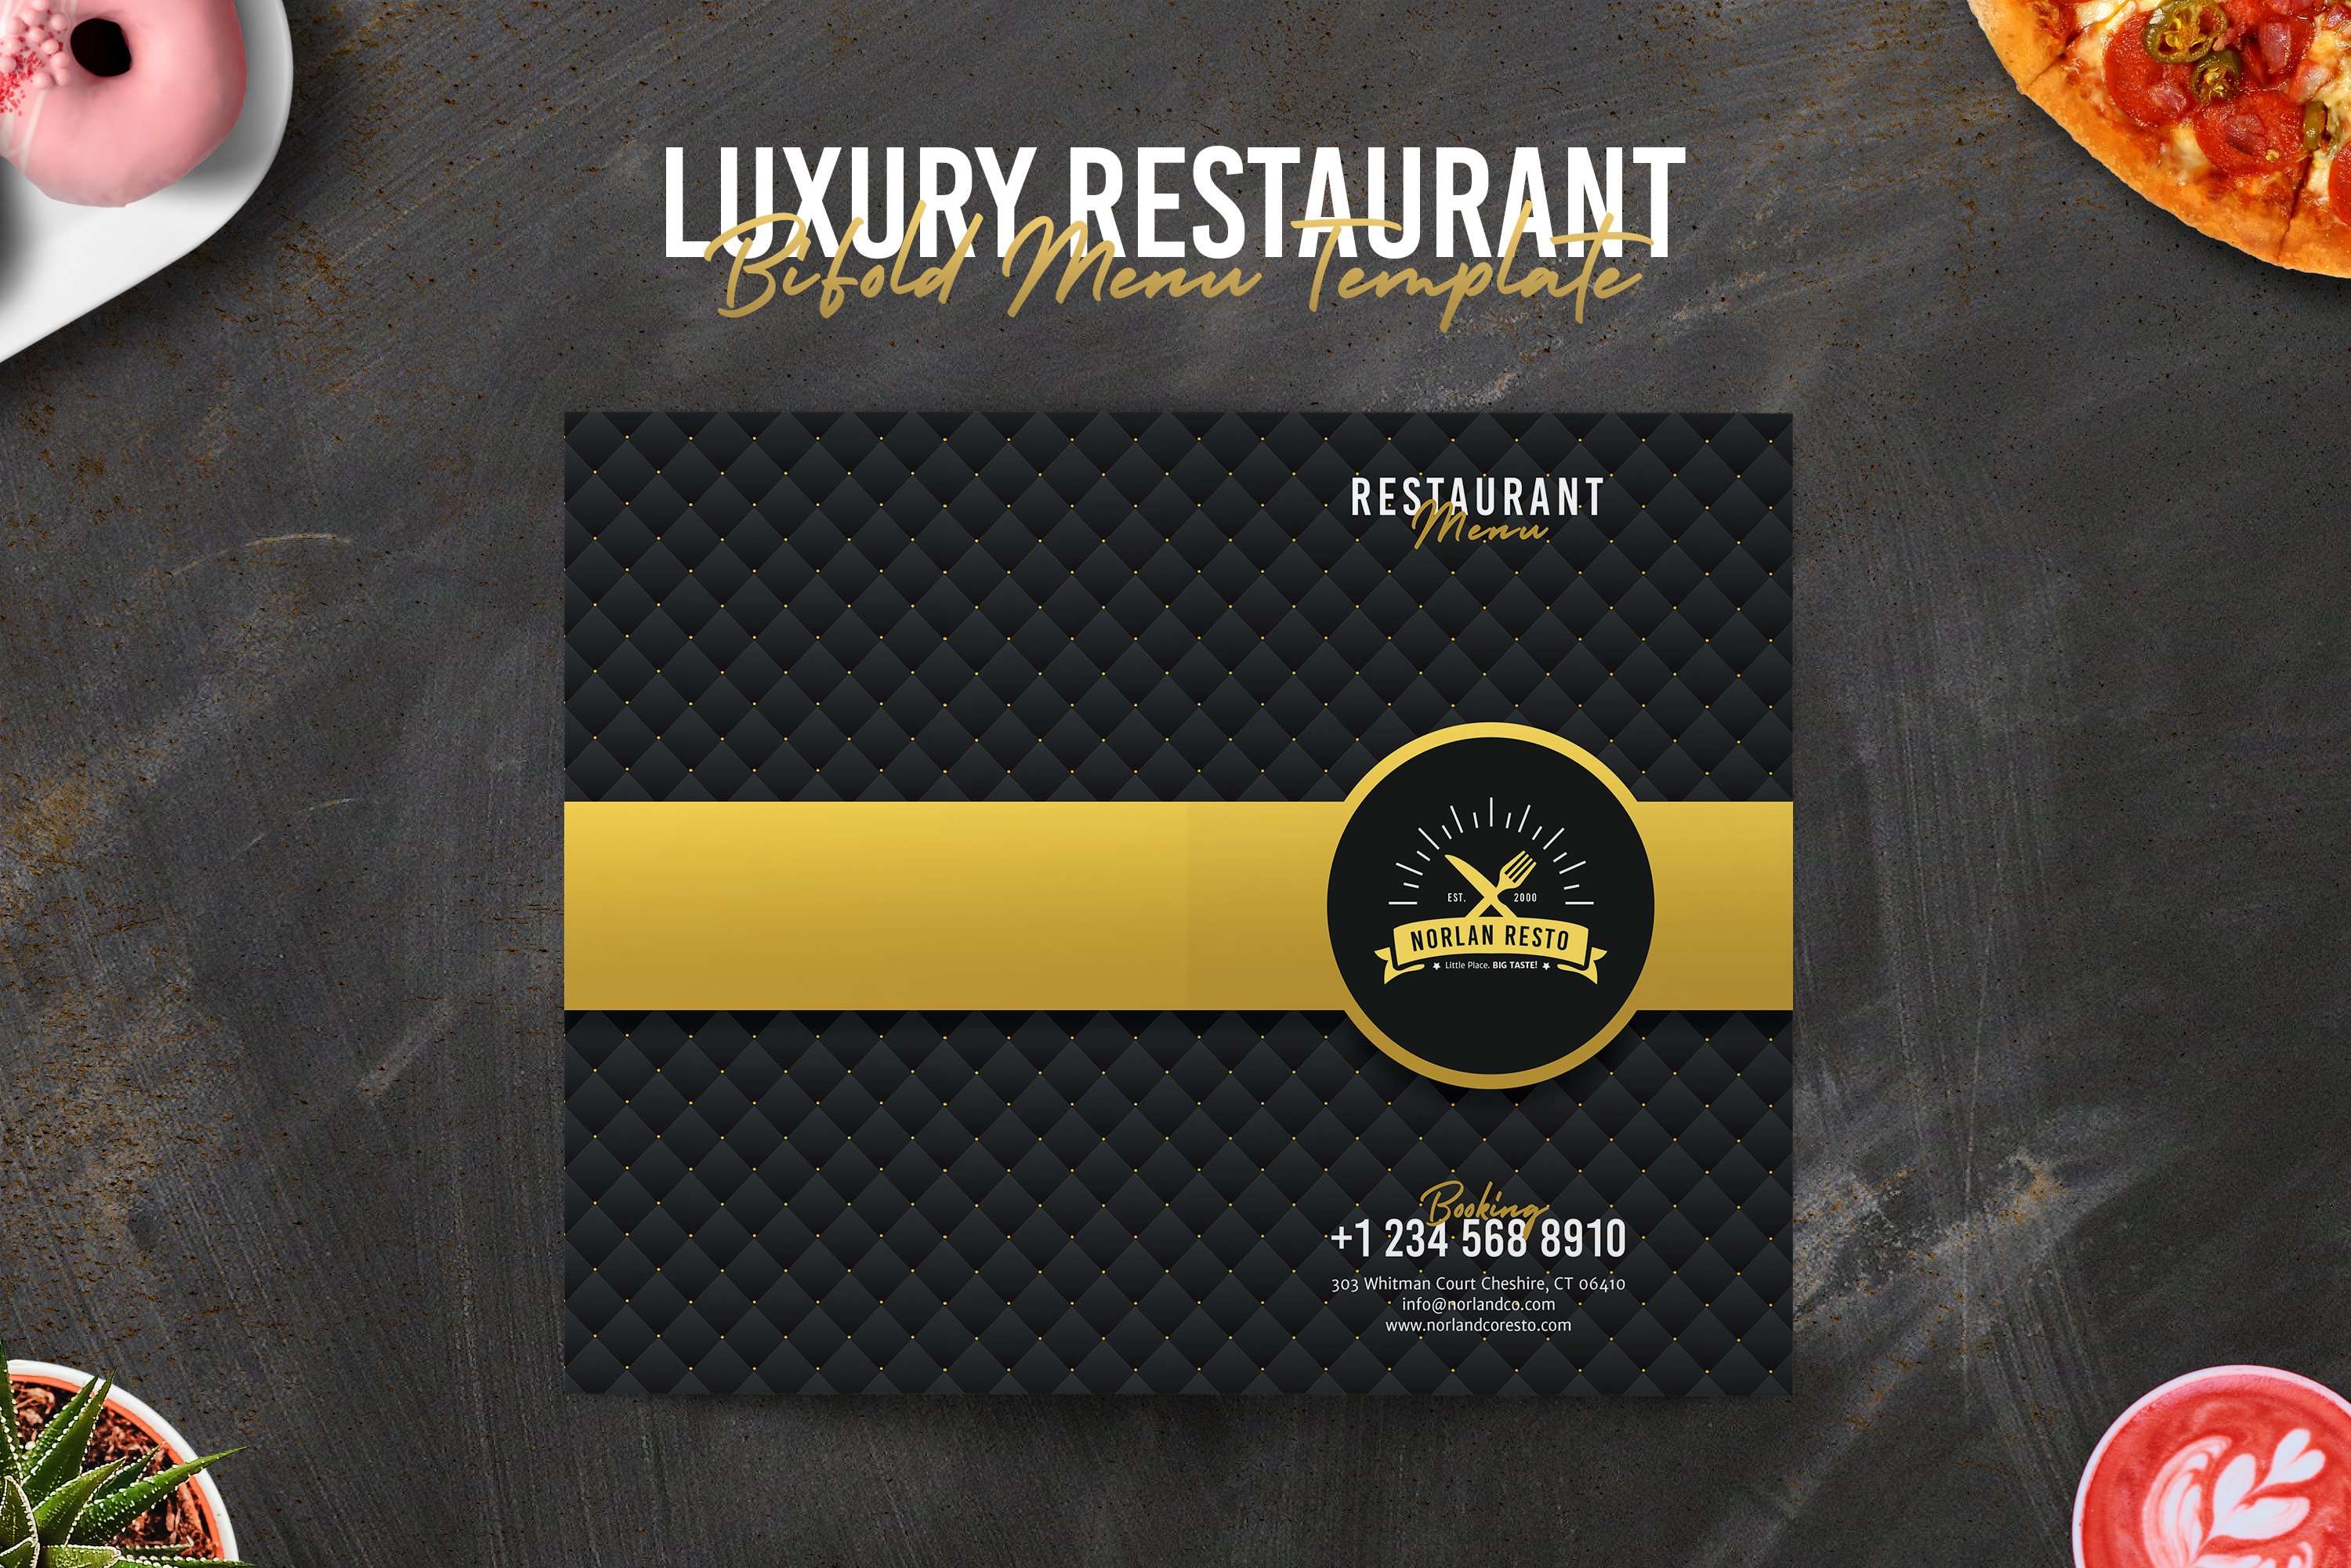 Luxury Restaurant BiFold Menu preview image.